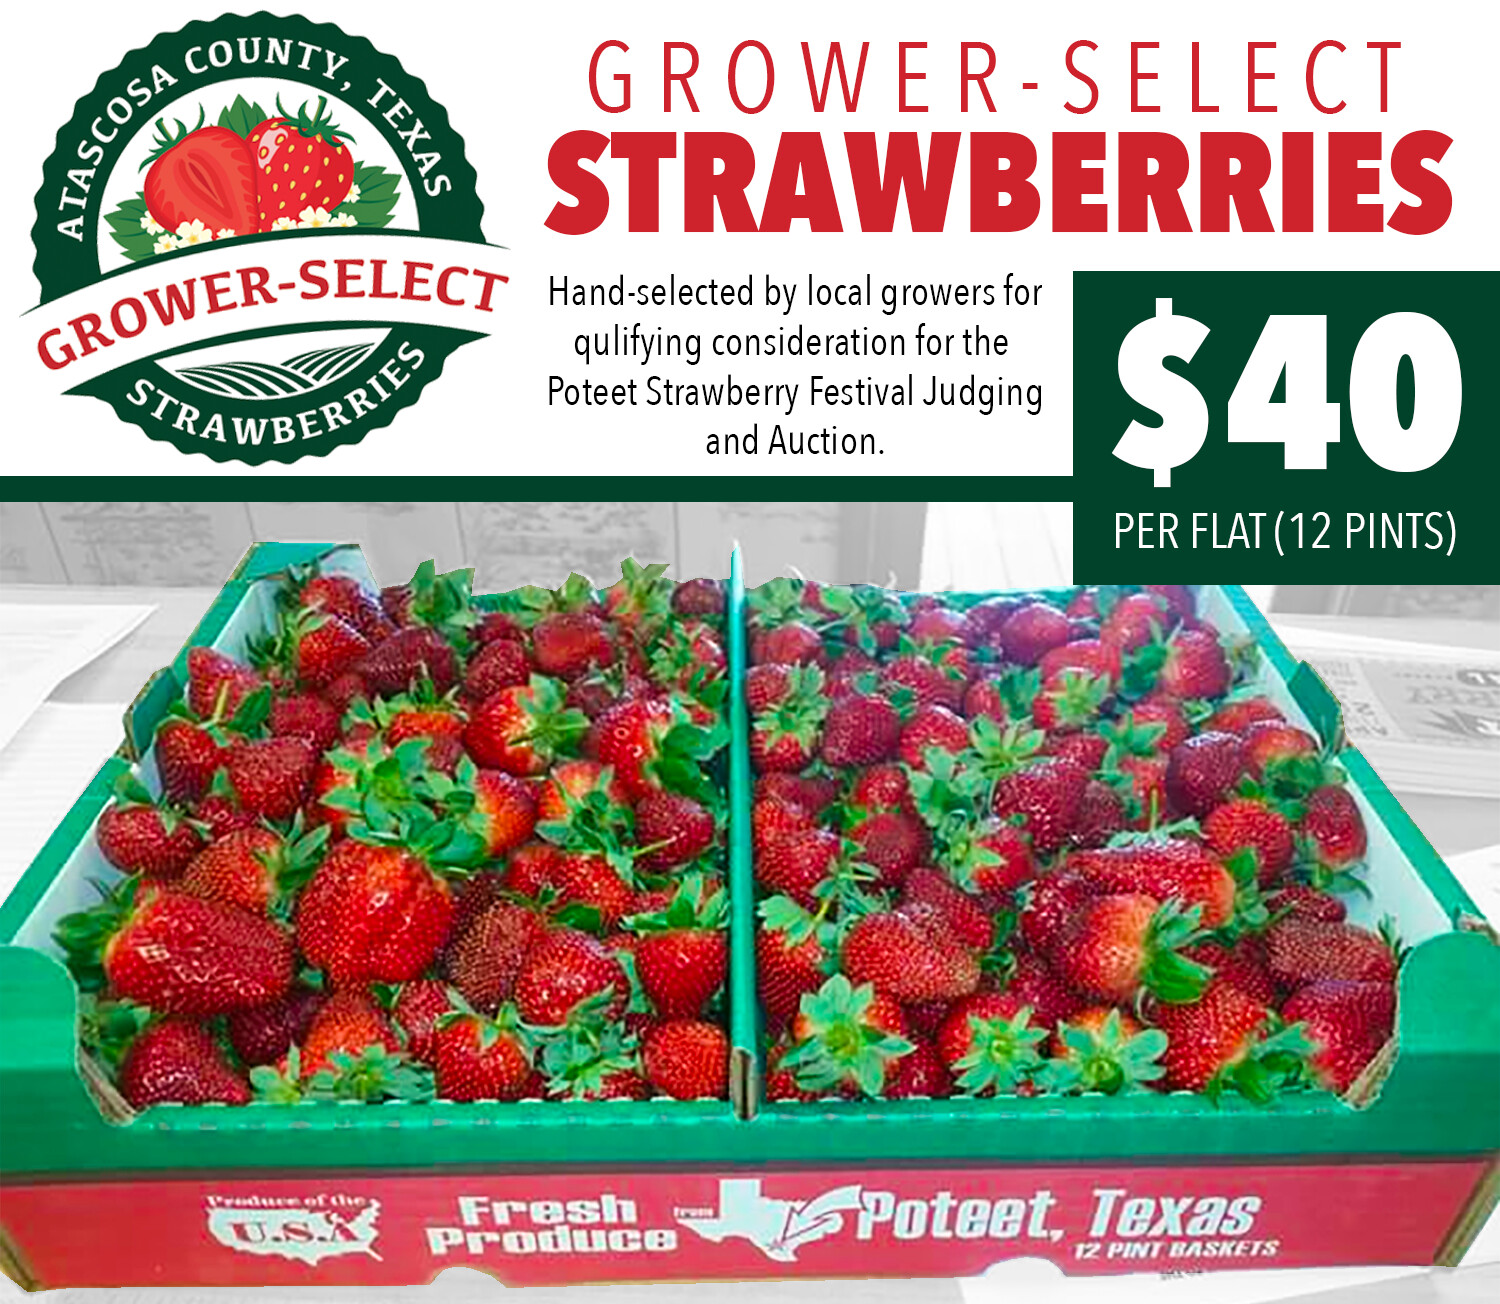 Grower-Select: STRAWBERRIES